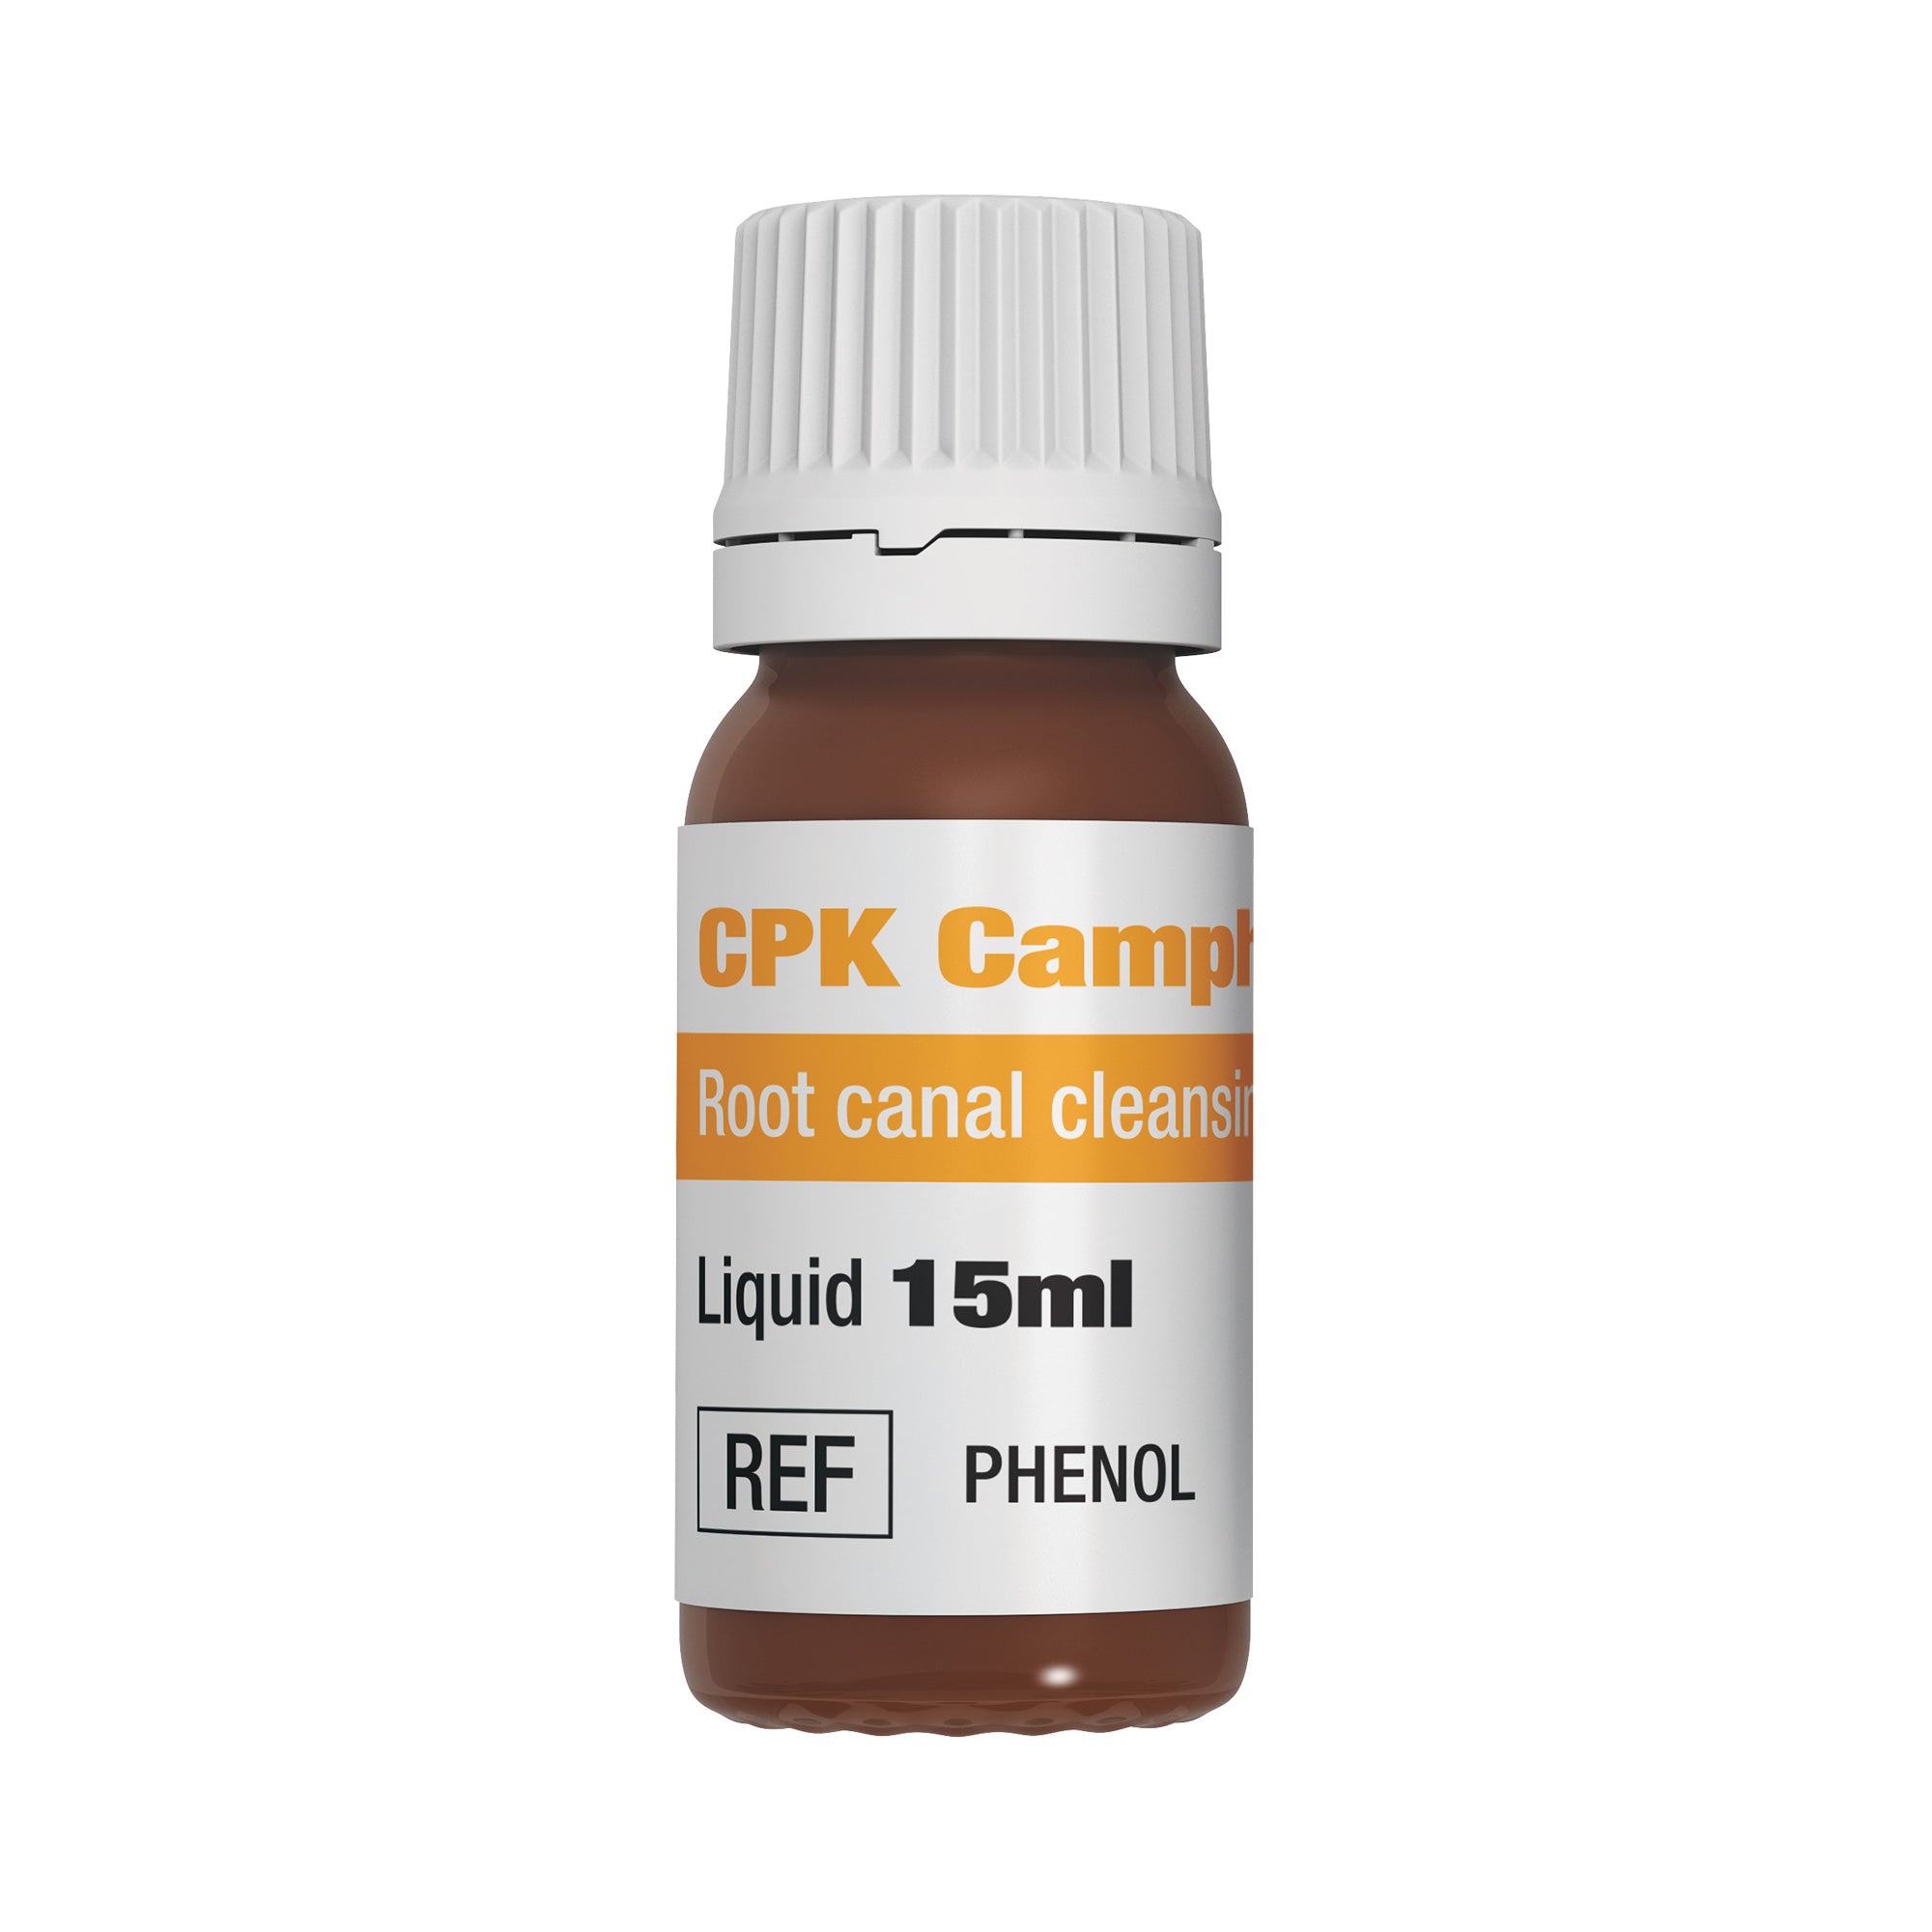 DSI Camphenol CPK Camphor Phenol 0.5oz 15ml